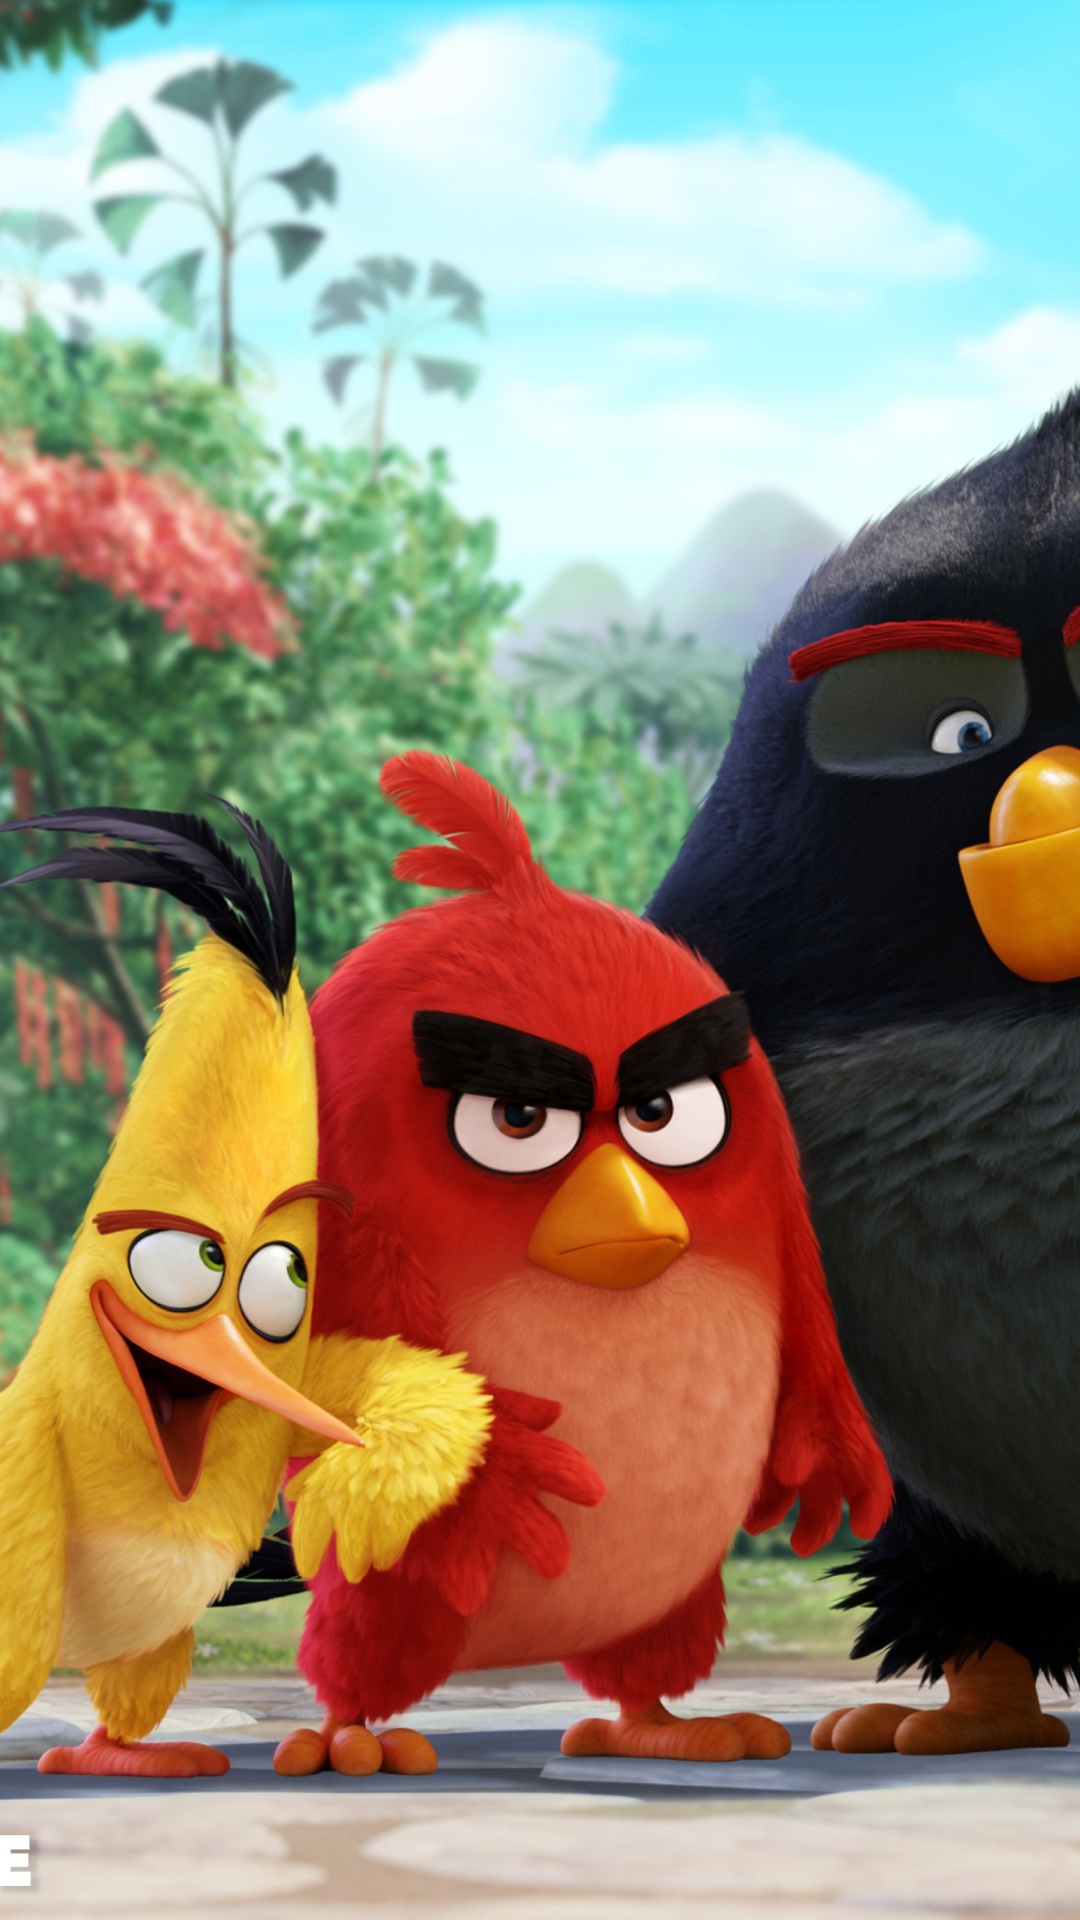 Angry Birds the Movie 2015 Movie by Rovio wallpaper 1080x1920